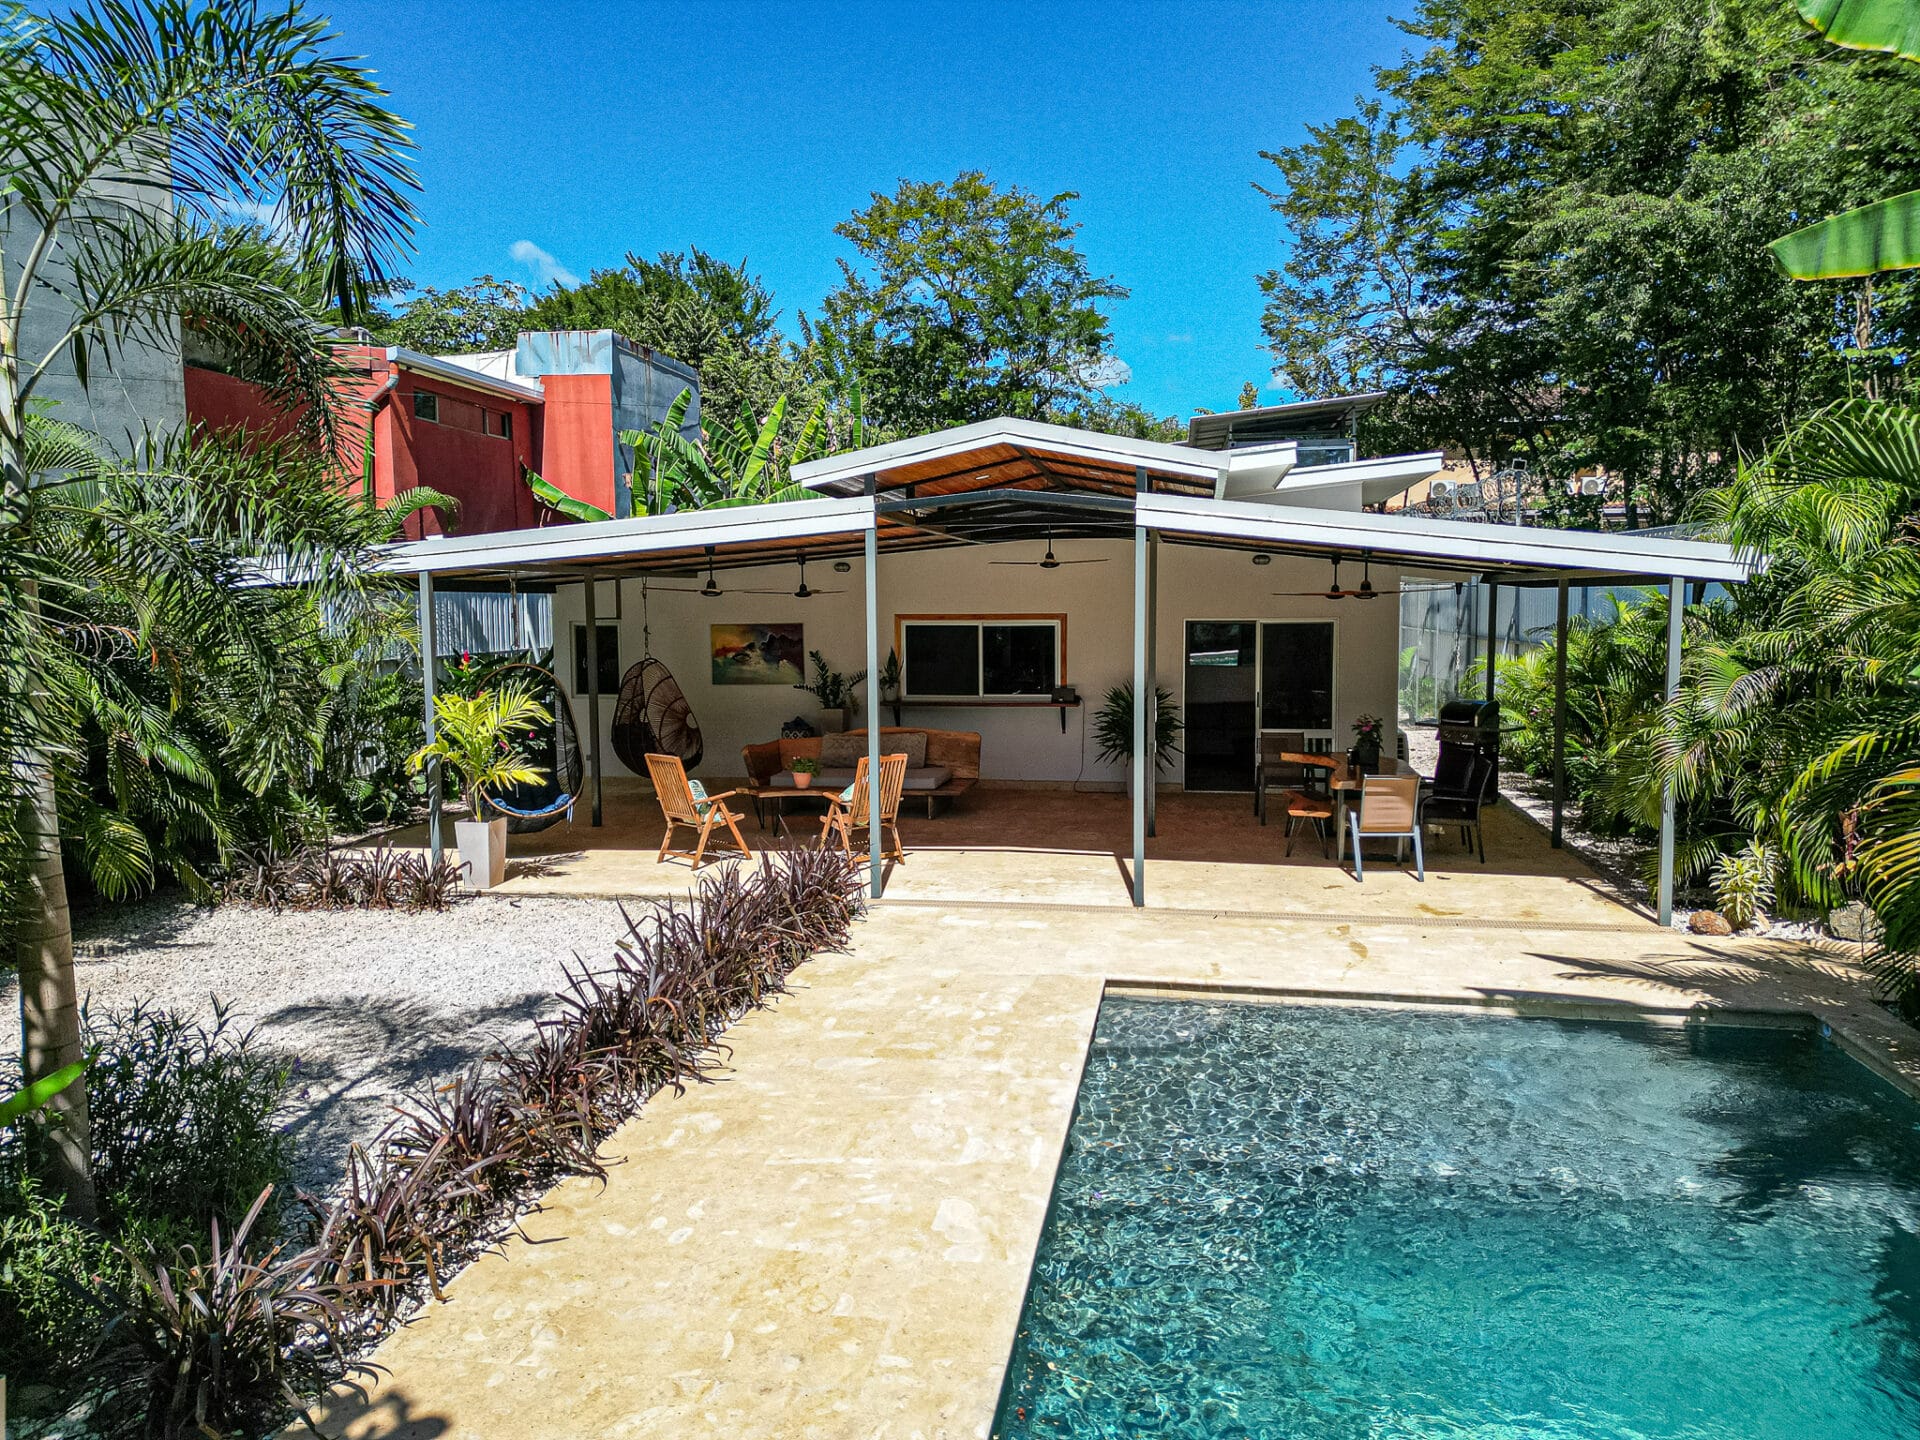 Casa de Lobos – Tropical Home + Apartment + Storage, Ideally Located in Tamarindo!